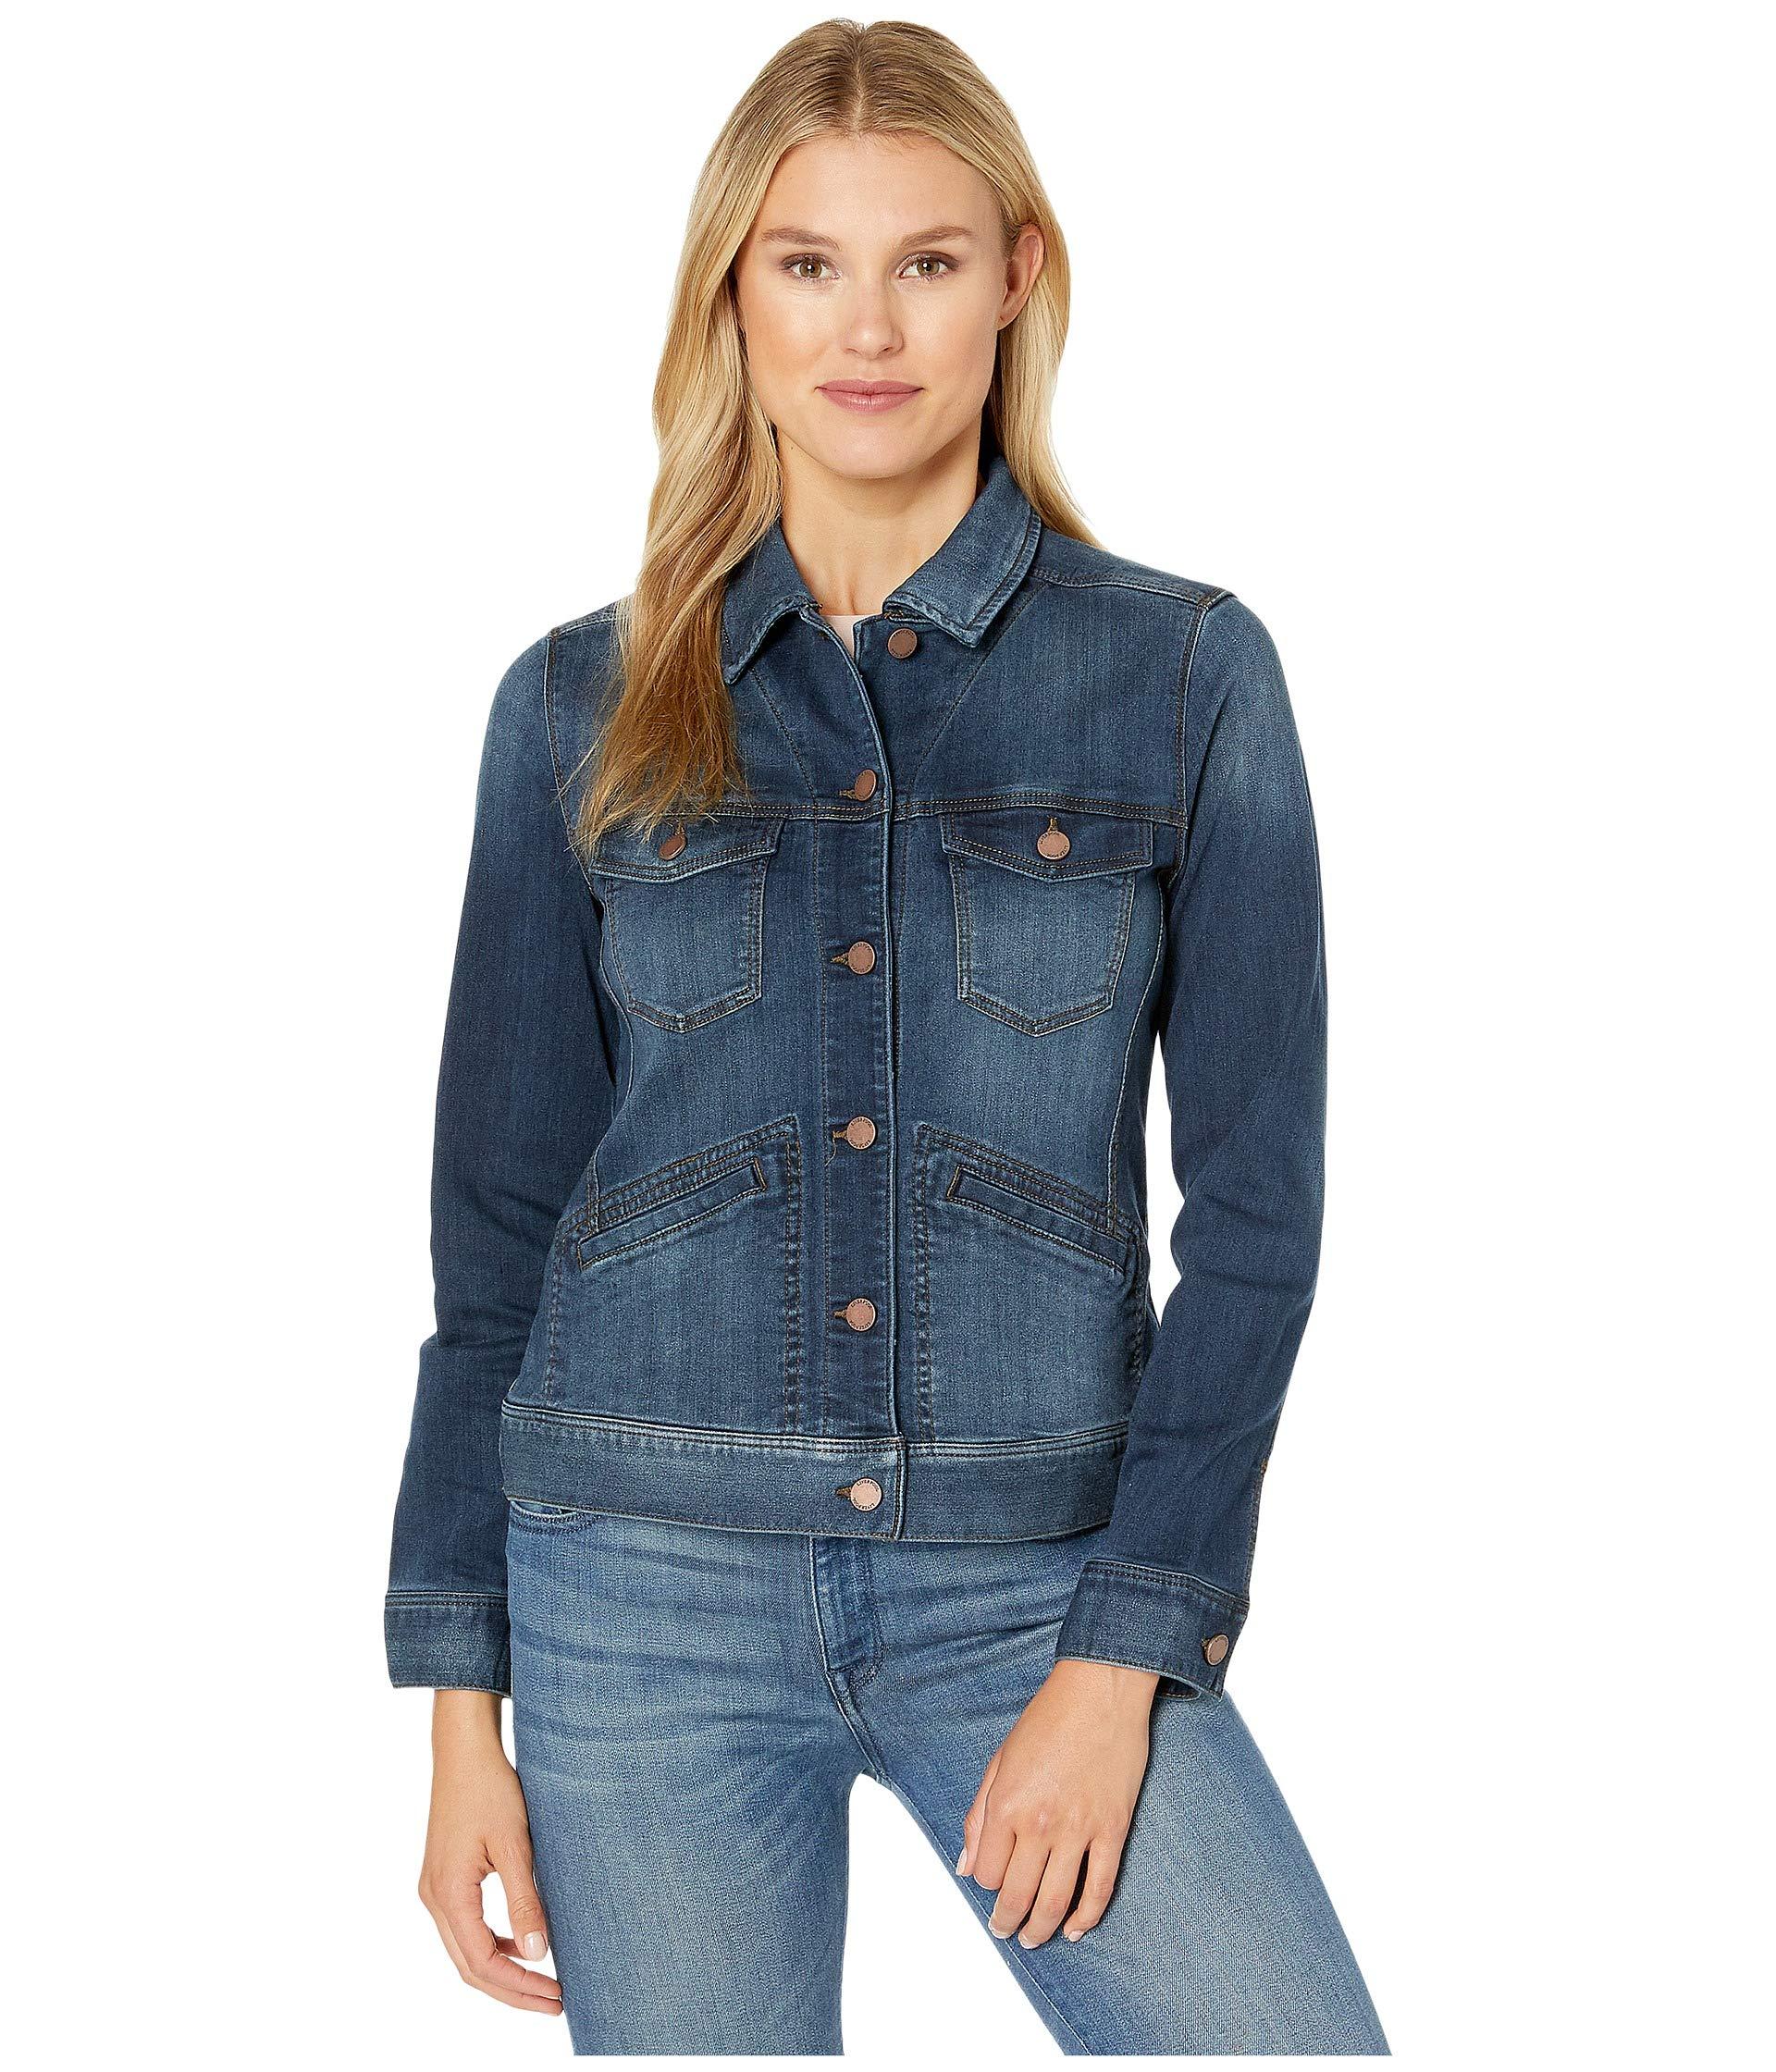 Liverpool Jeans Company Denim Jacket In Silky Soft Denim in Blue - Lyst